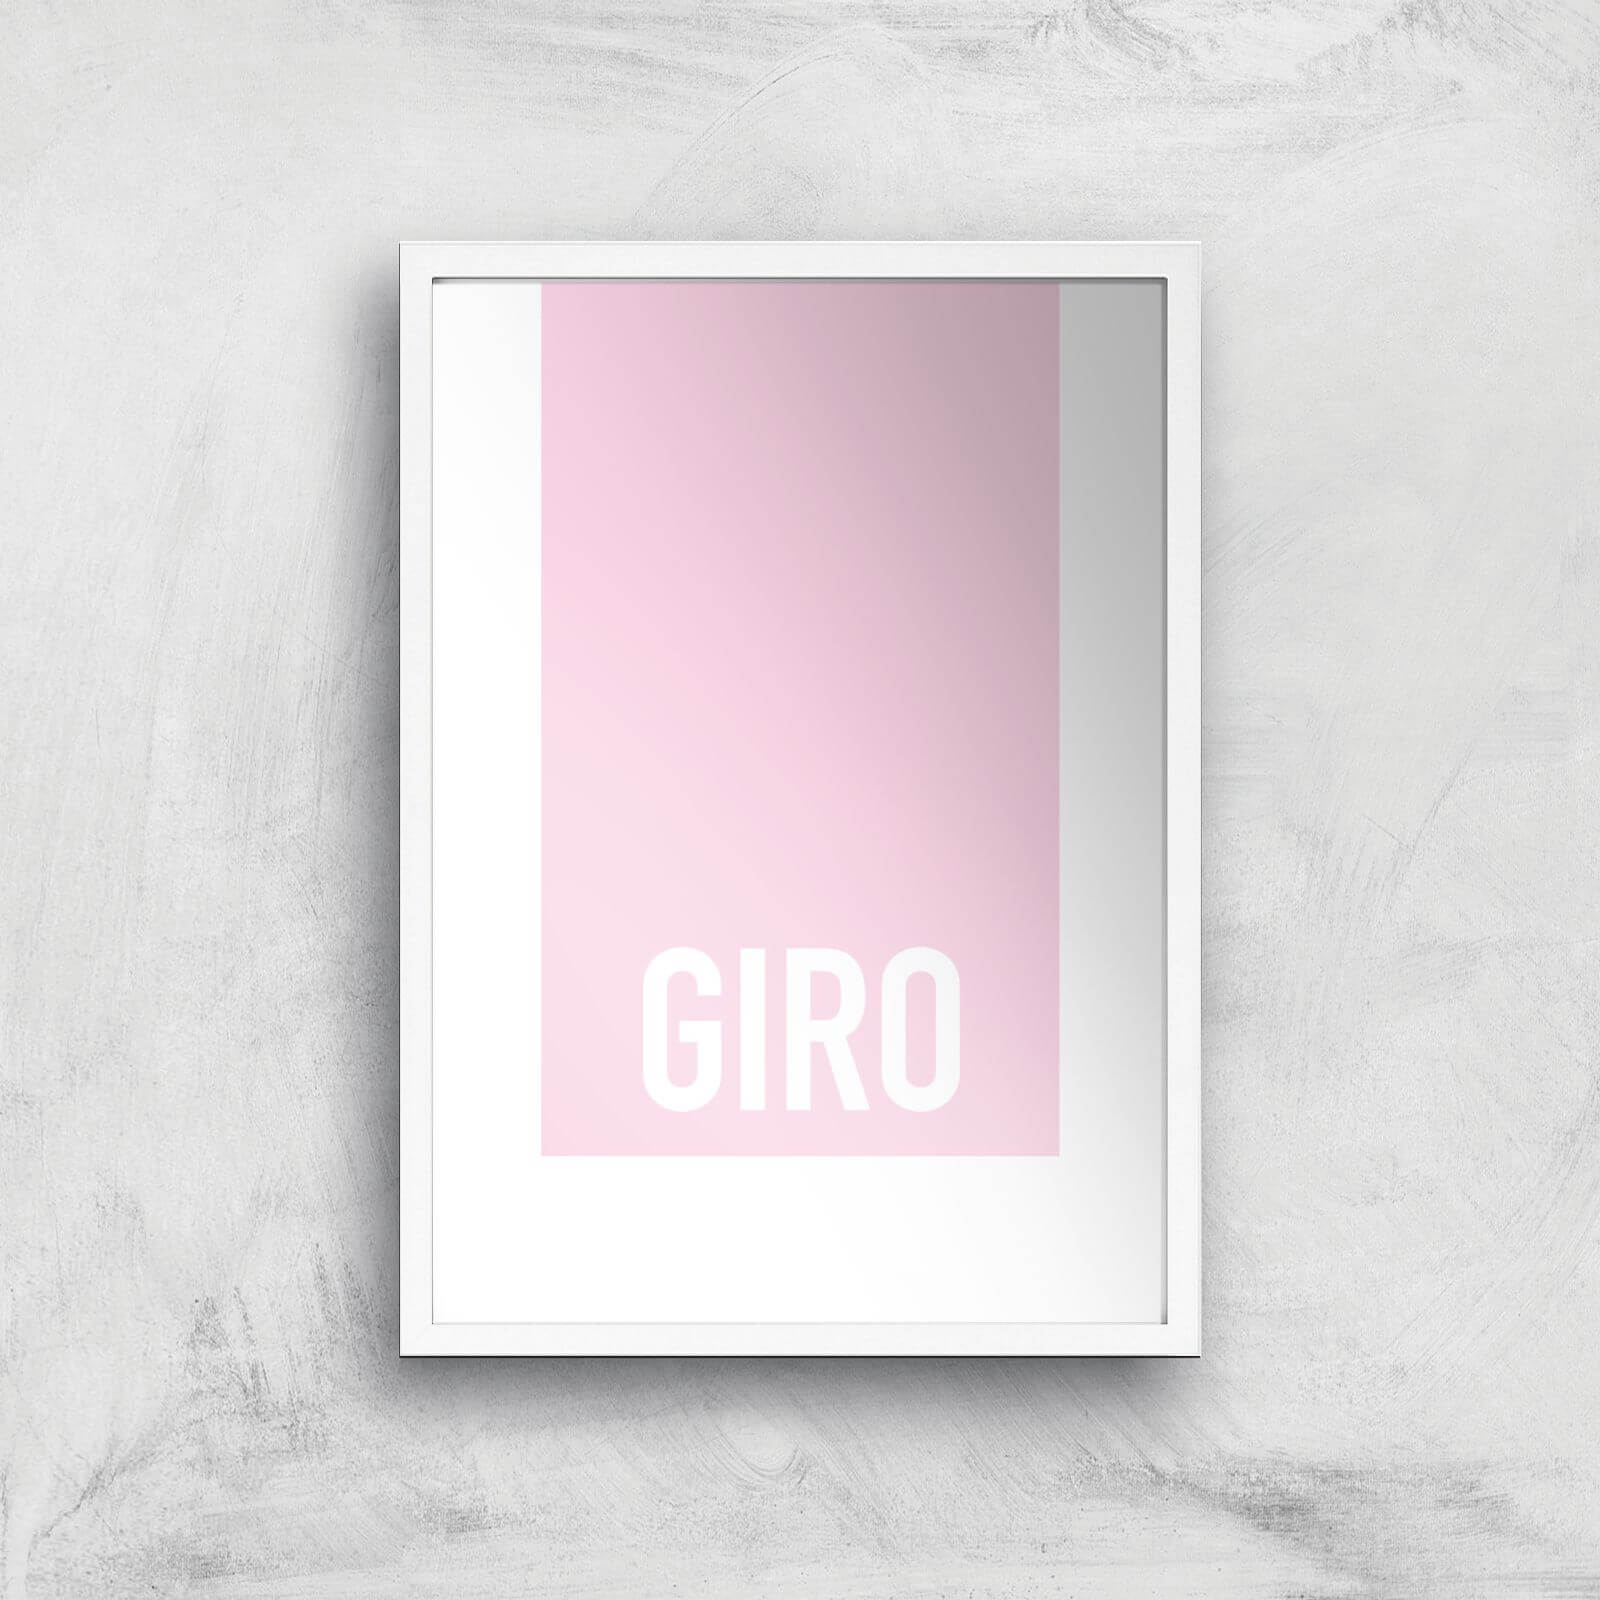 PBK Giro Giclee Art Print - A3 - White Frame